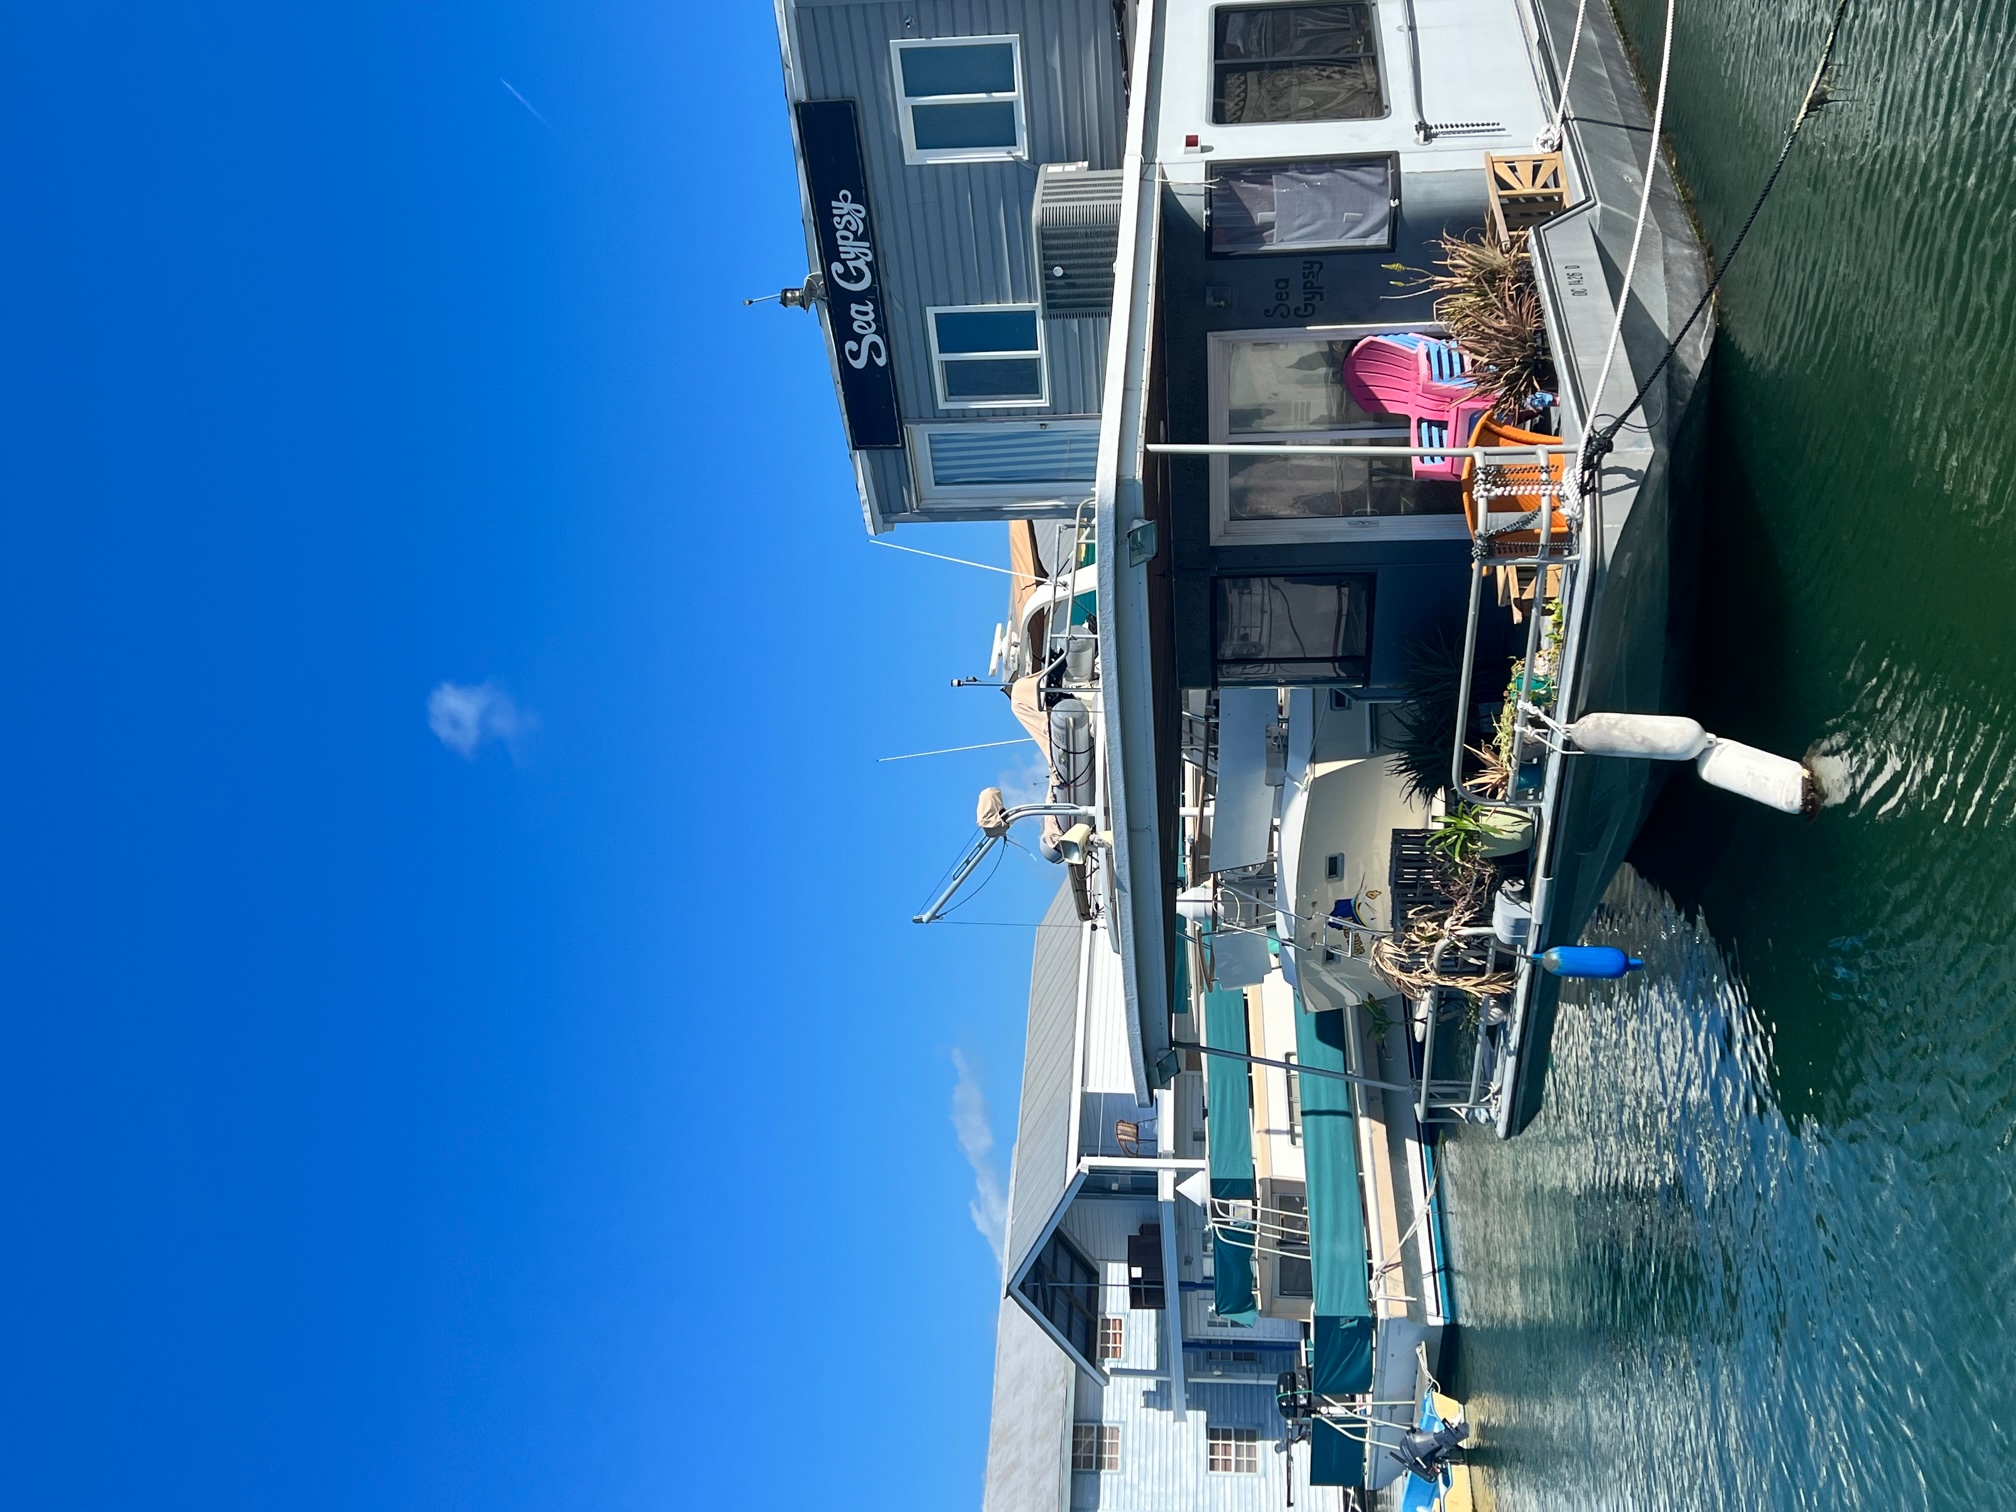 1996 64 foot Sunstar Houseboat Houseboat for sale in Key West, FL - image 16 